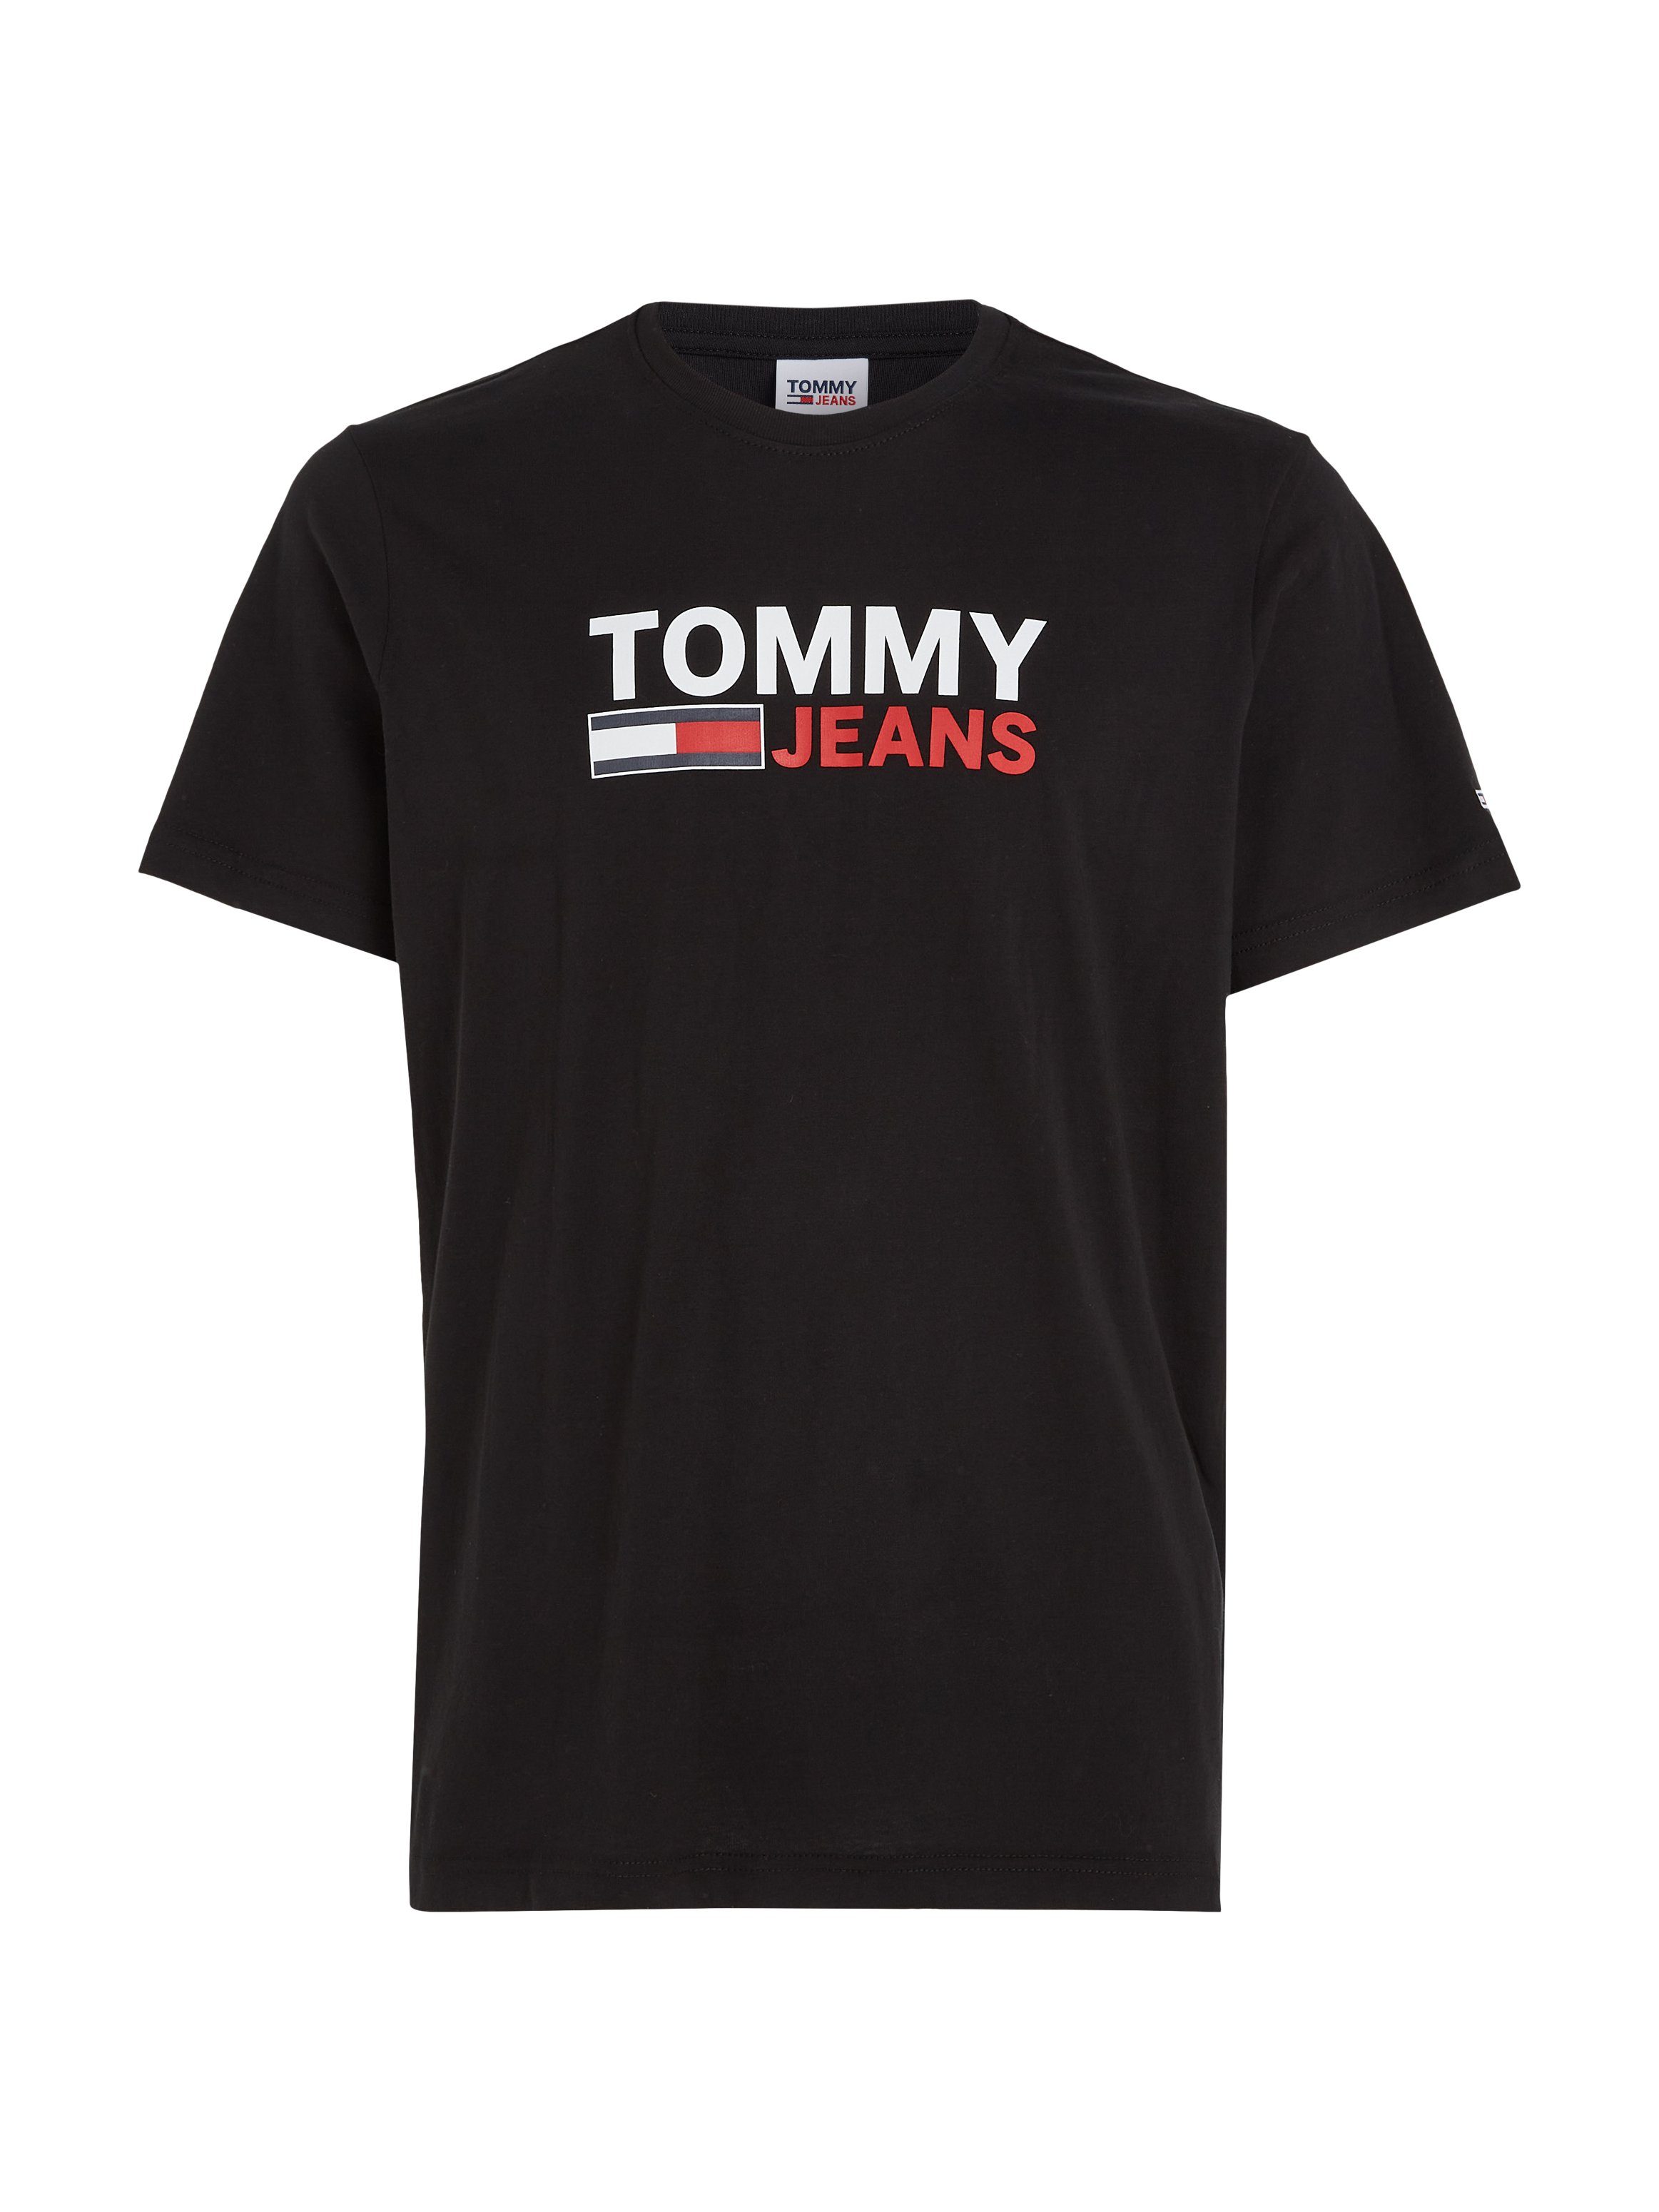 CORP Jeans TJM T-Shirt Black Tommy LOGO TEE